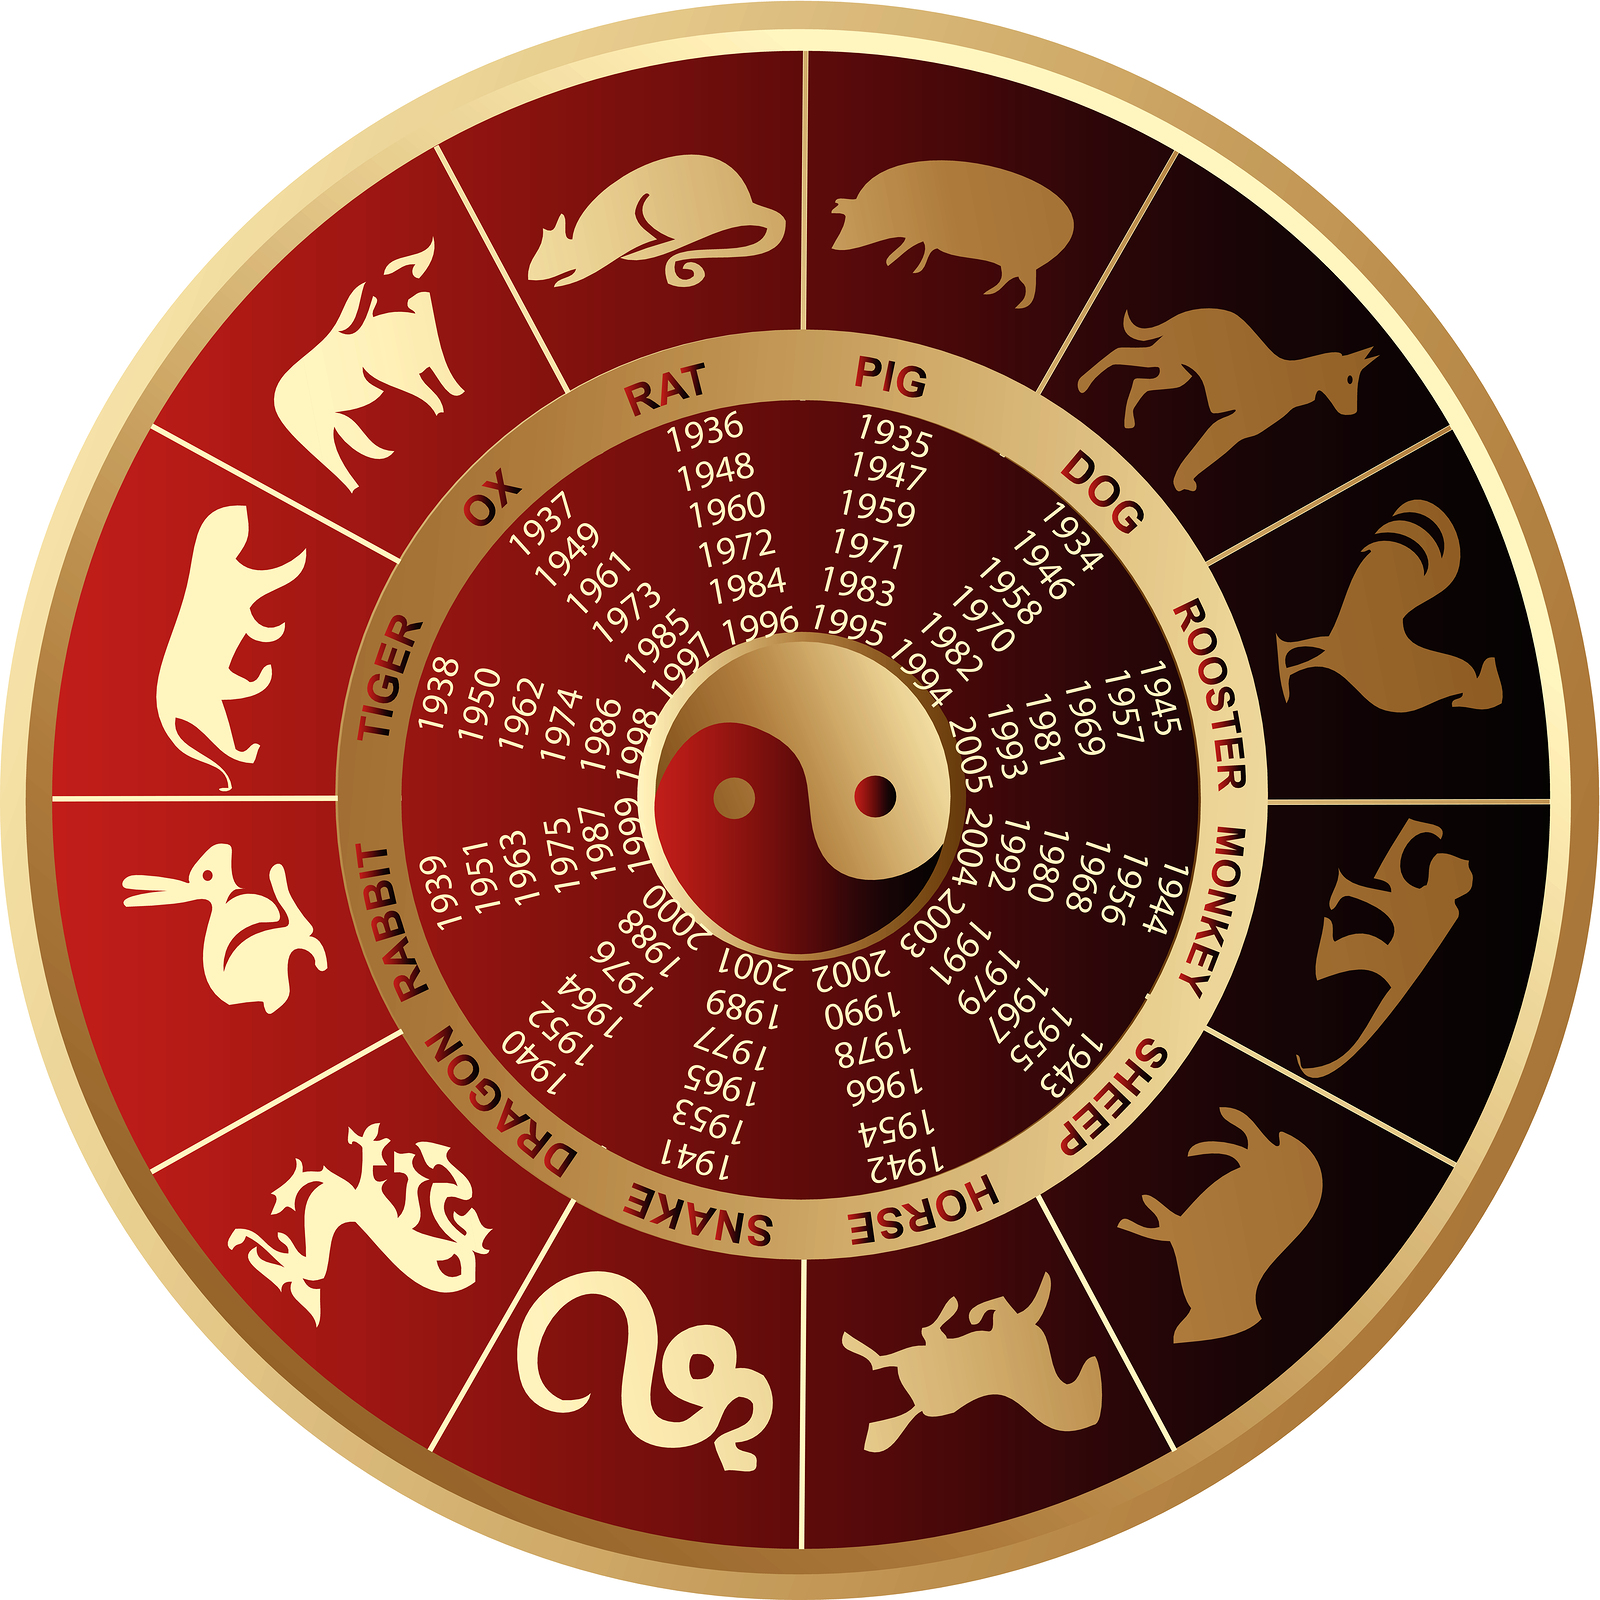 Hiina Horoskoop - 12 Sodiaagi Looma - Leia oma Sodiaagimärk